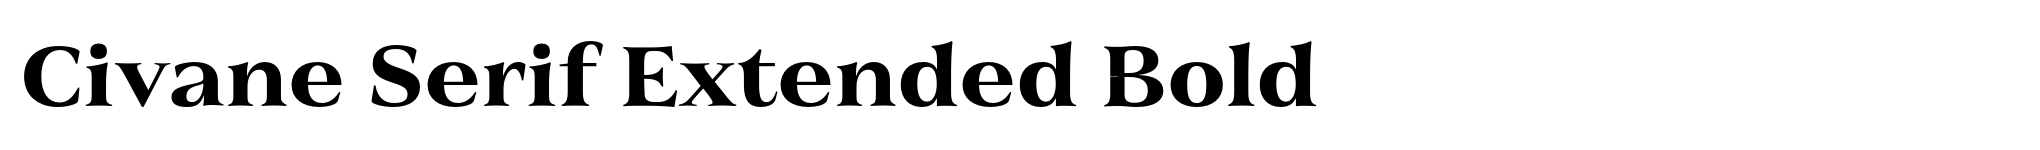 Civane Serif Extended Bold image